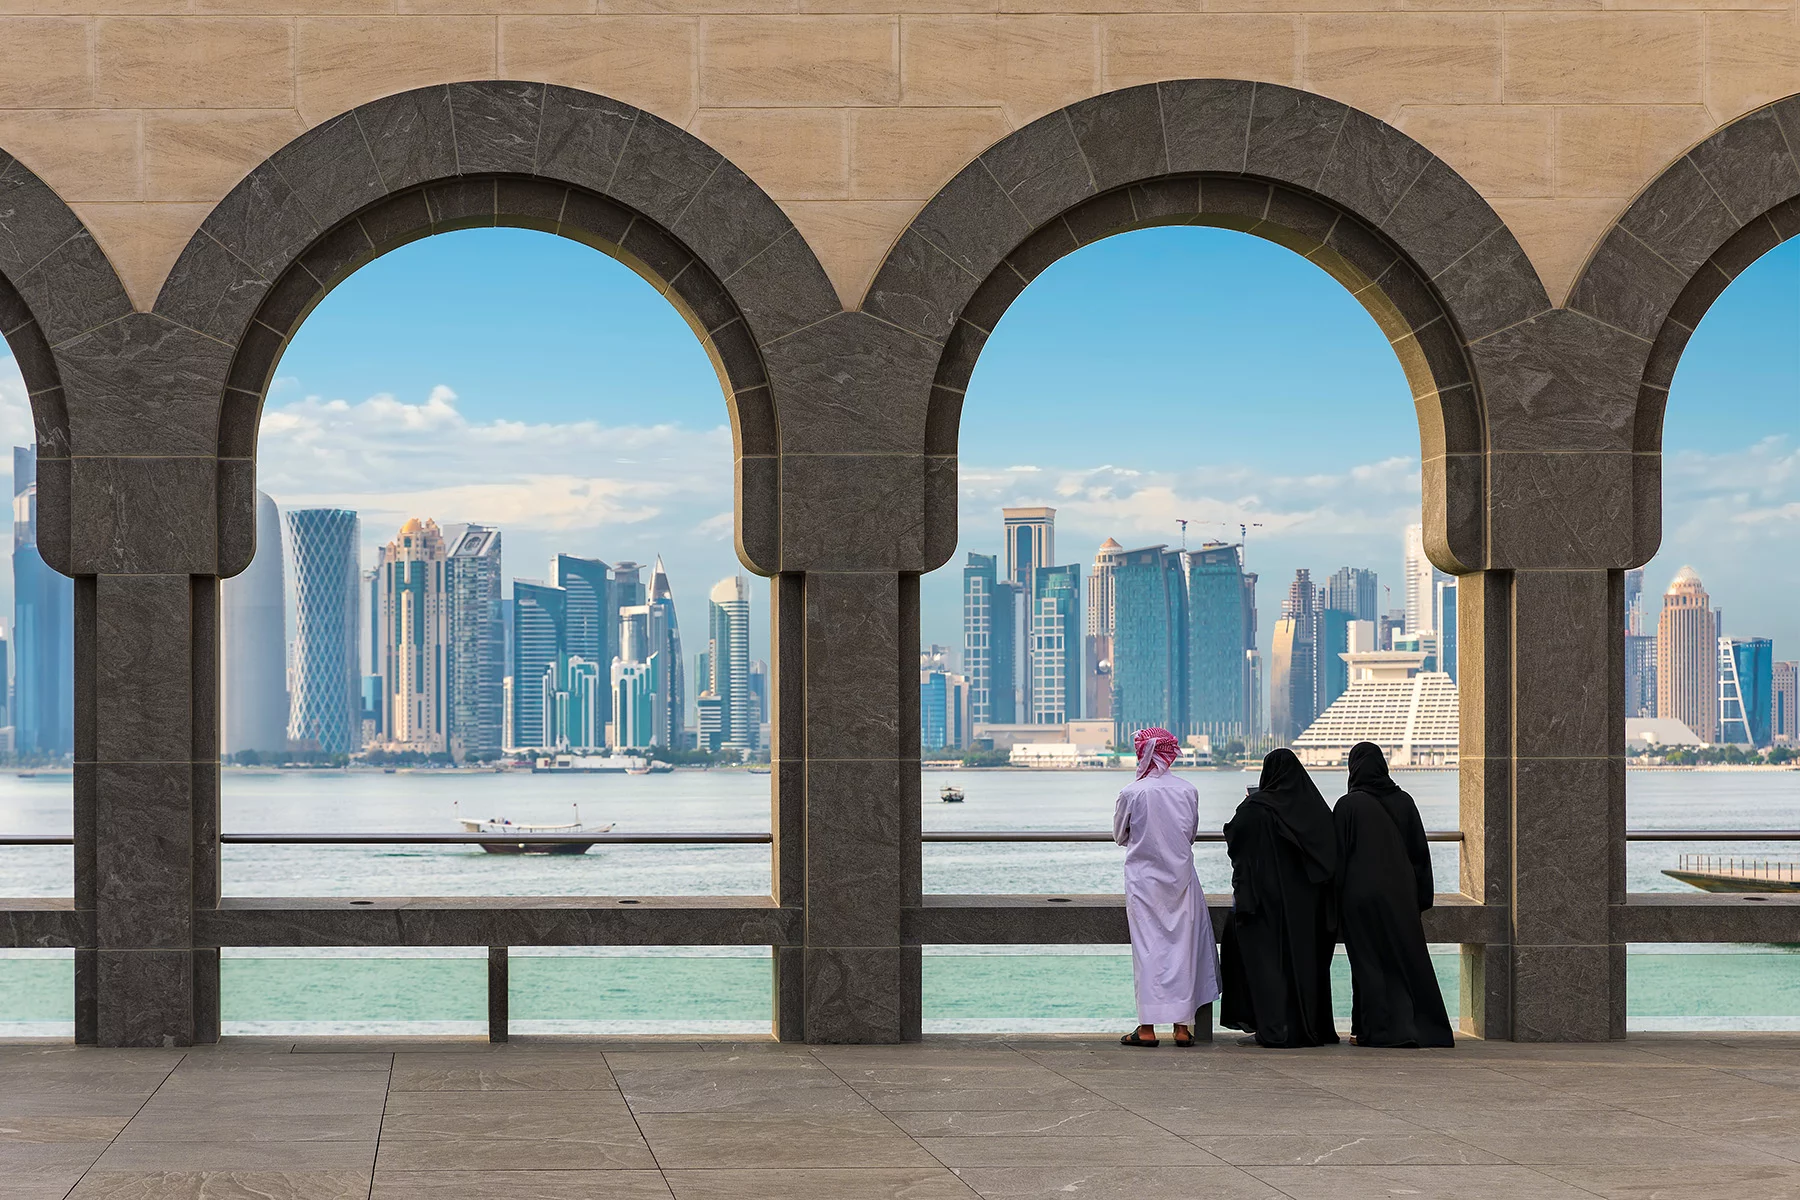 Qatari people wearing traditional dress